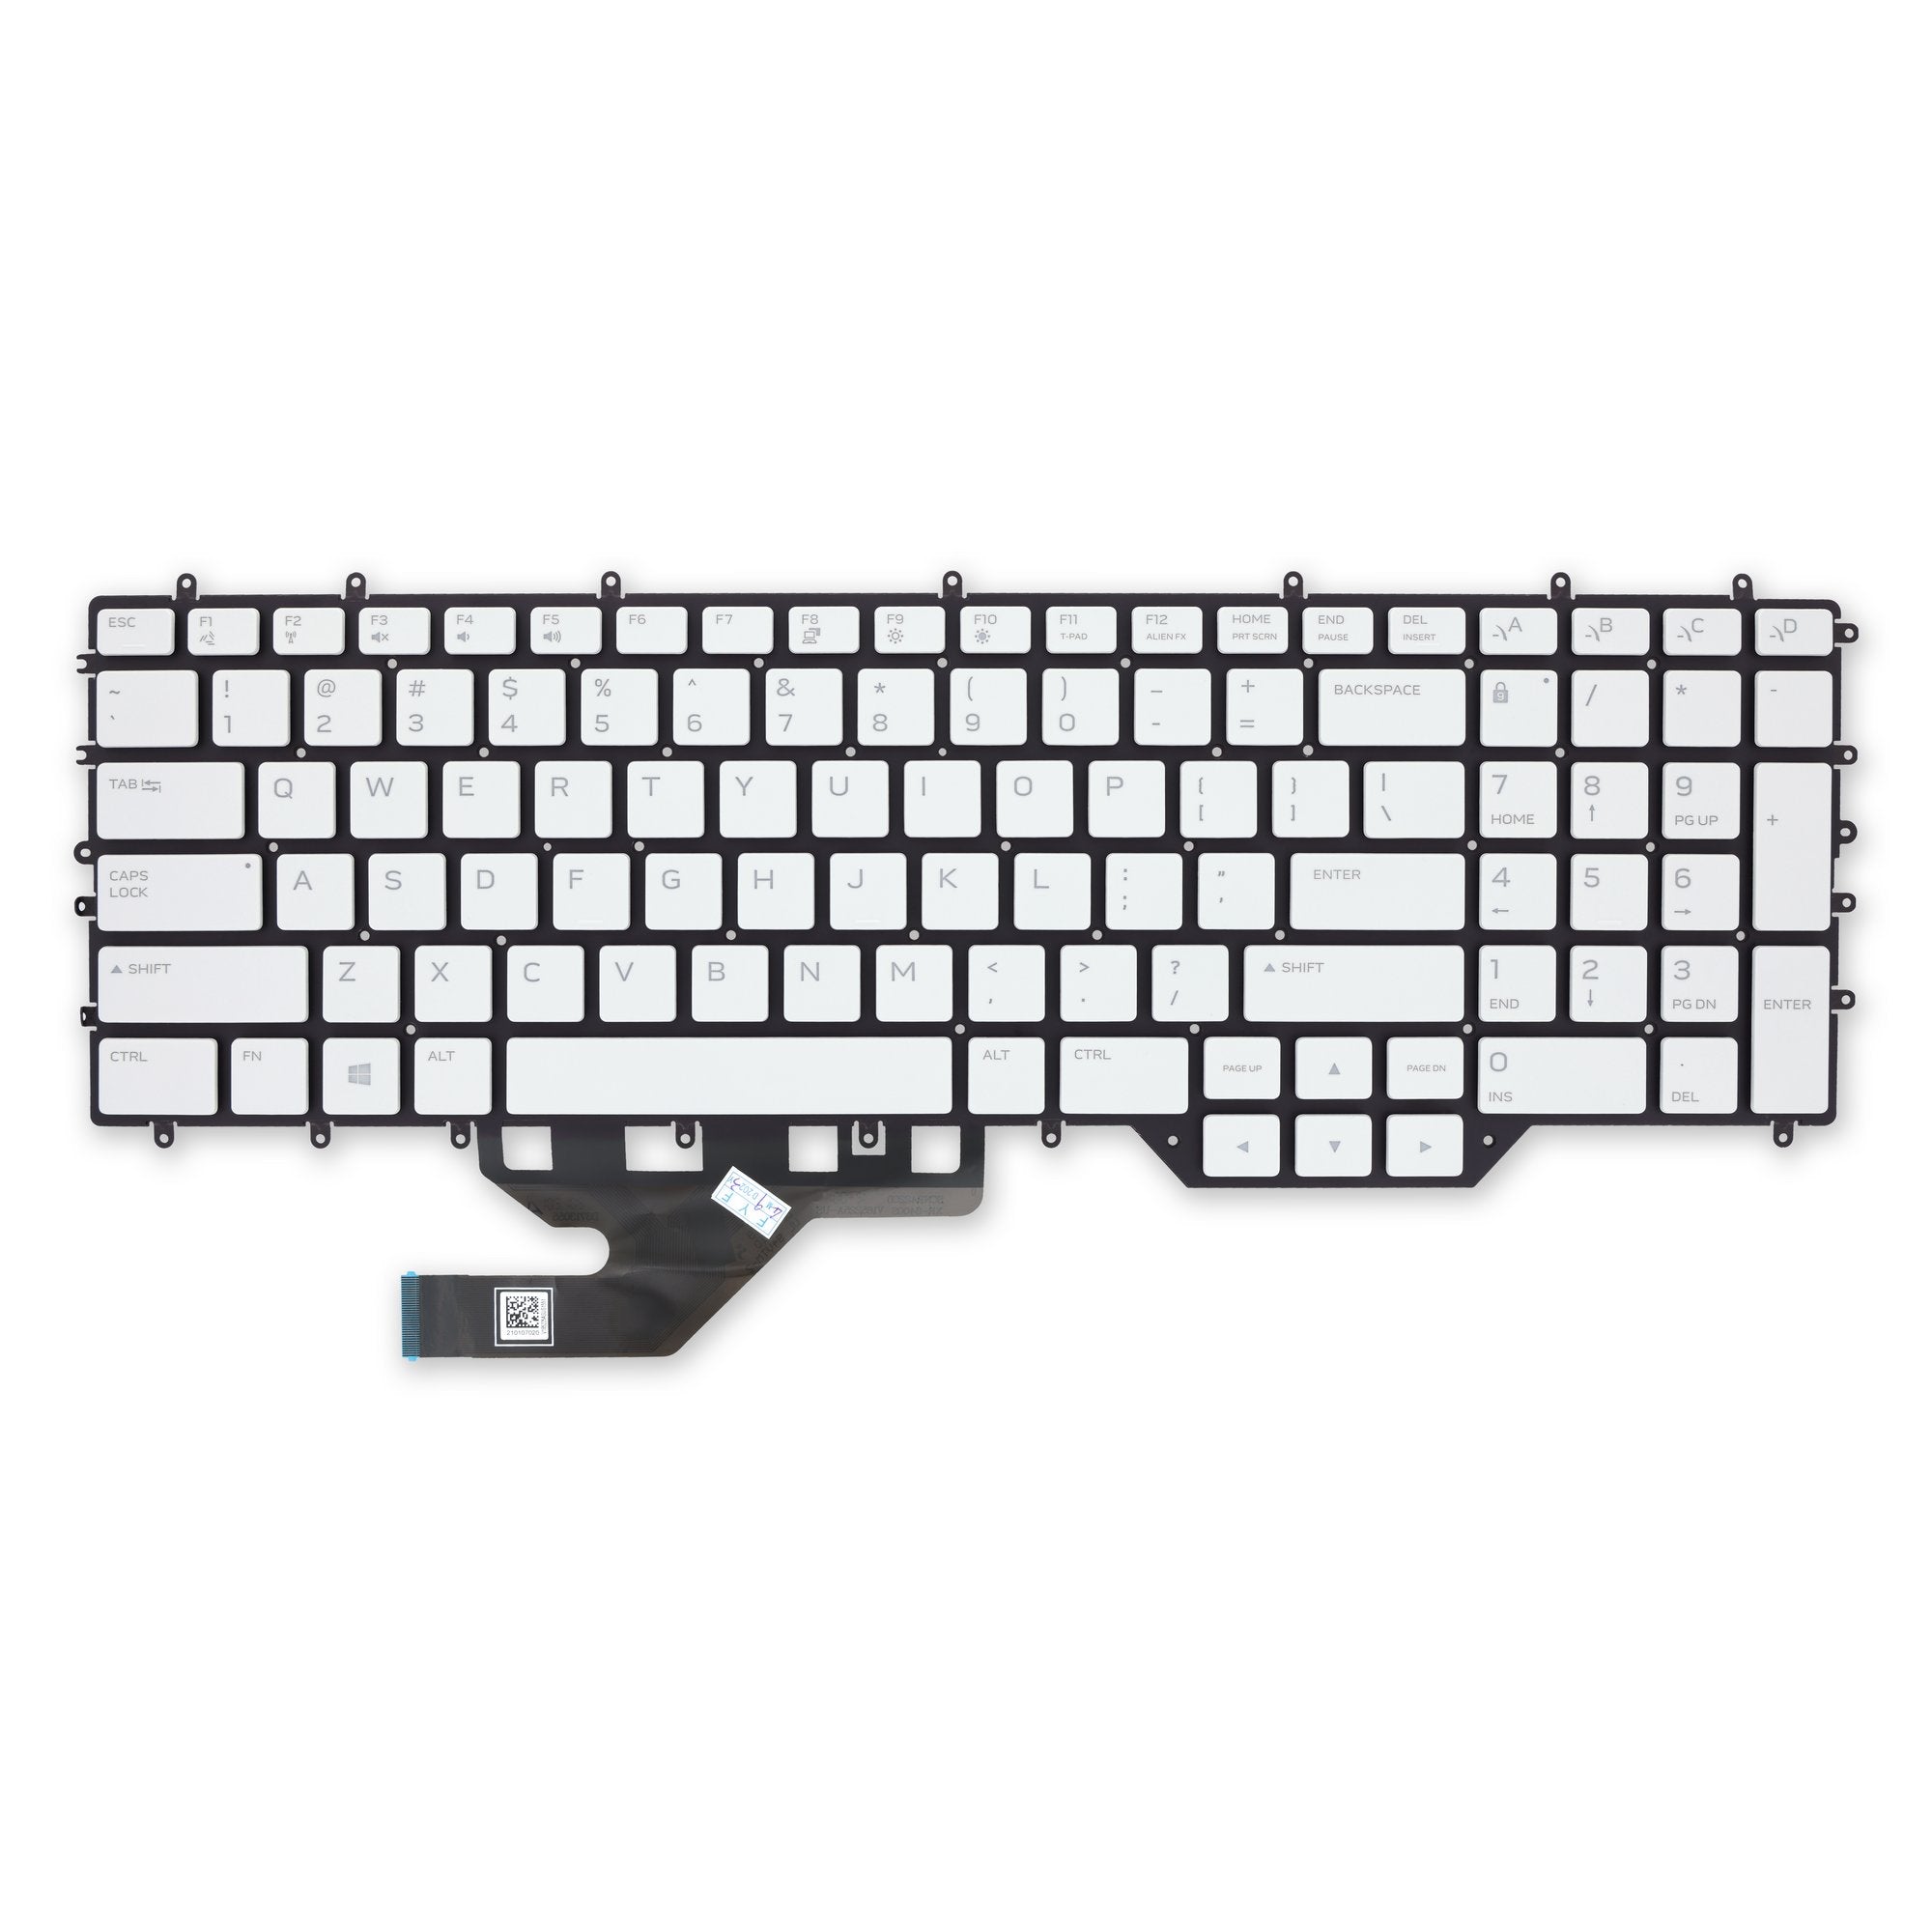 Dell Alienware m17 R2 Backlit Keyboard - CRK5J New